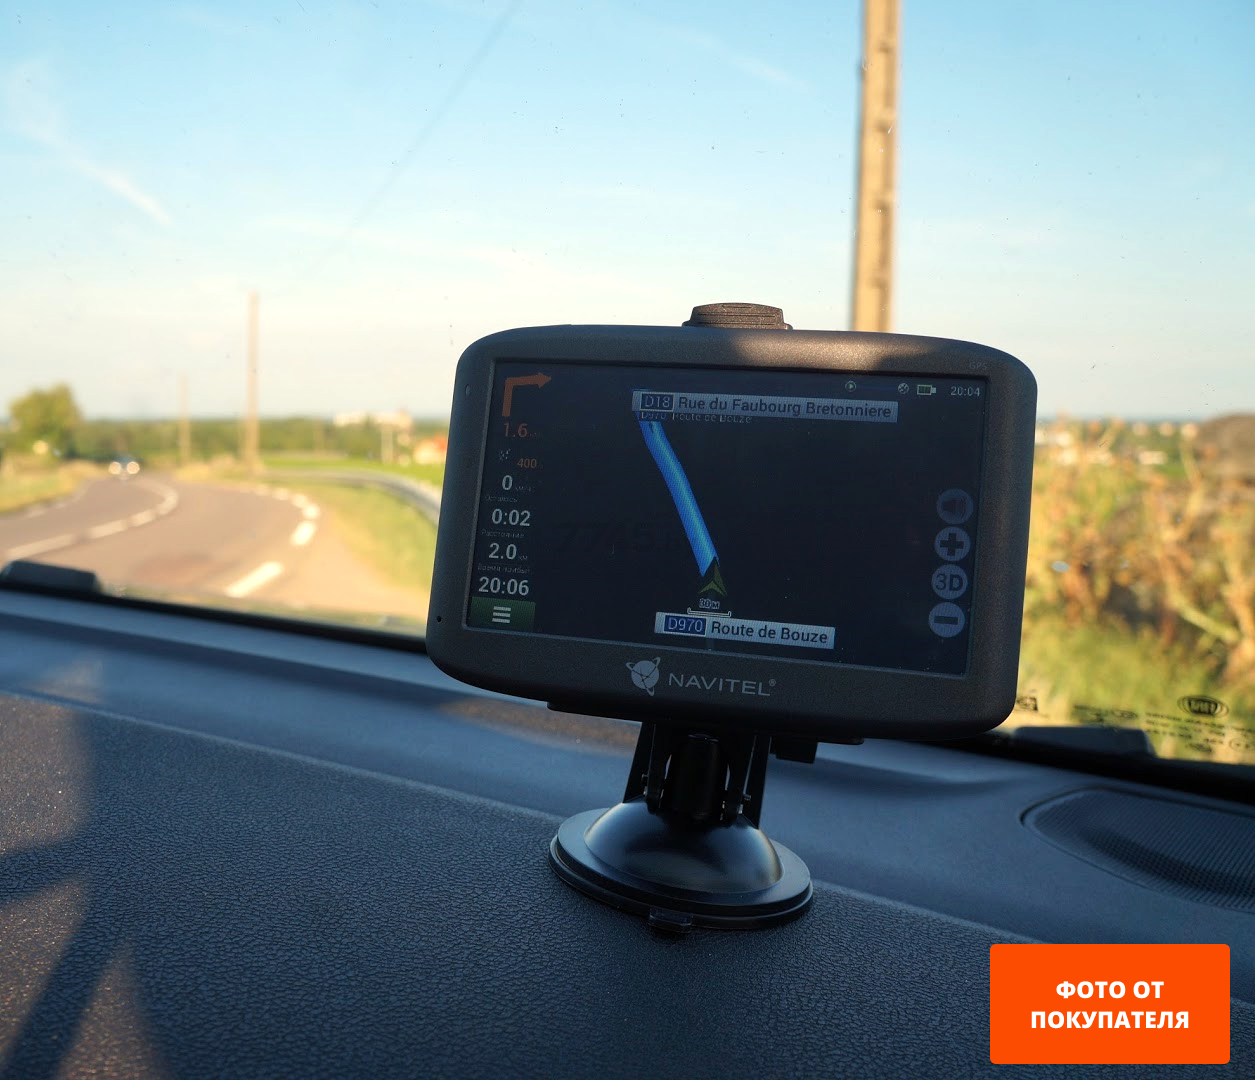 GPS навигатор NAVITEL N500 с ПО NAVITEL Navigator (СНГ + Прибалтика)